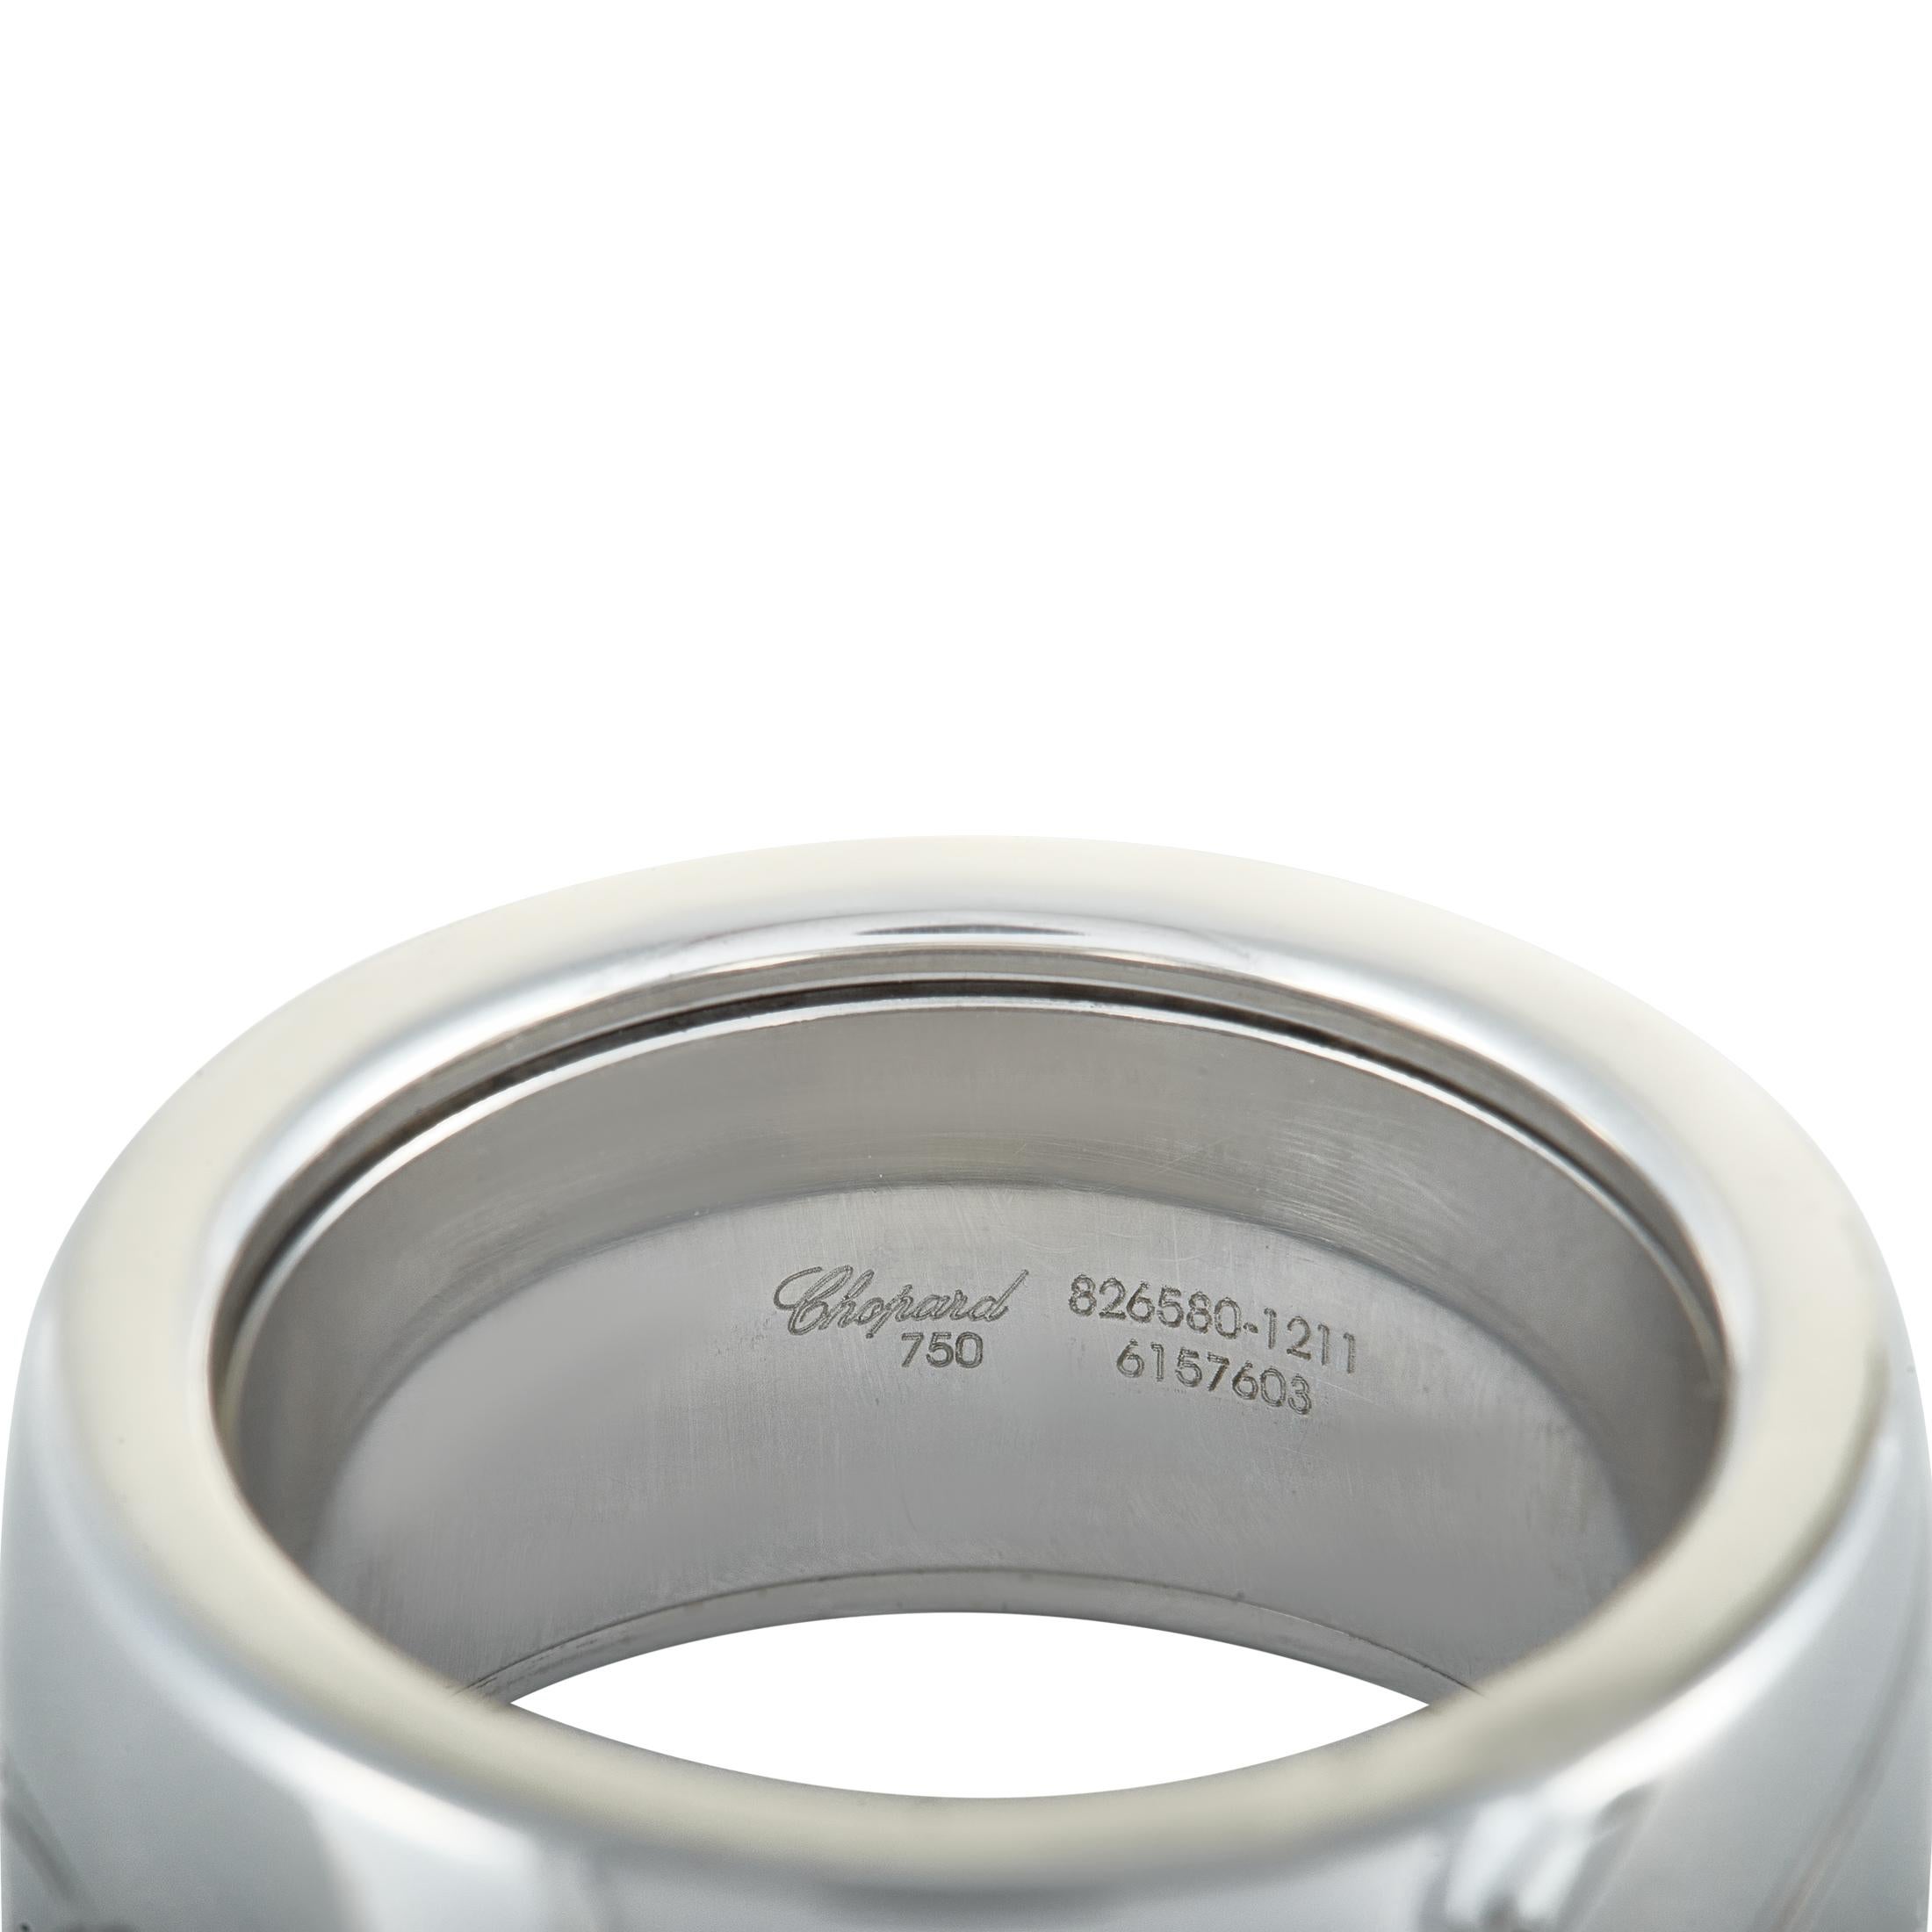 Chopard Chopardissimo 18 Karat White Gold Diamond Signature Band Ring 1